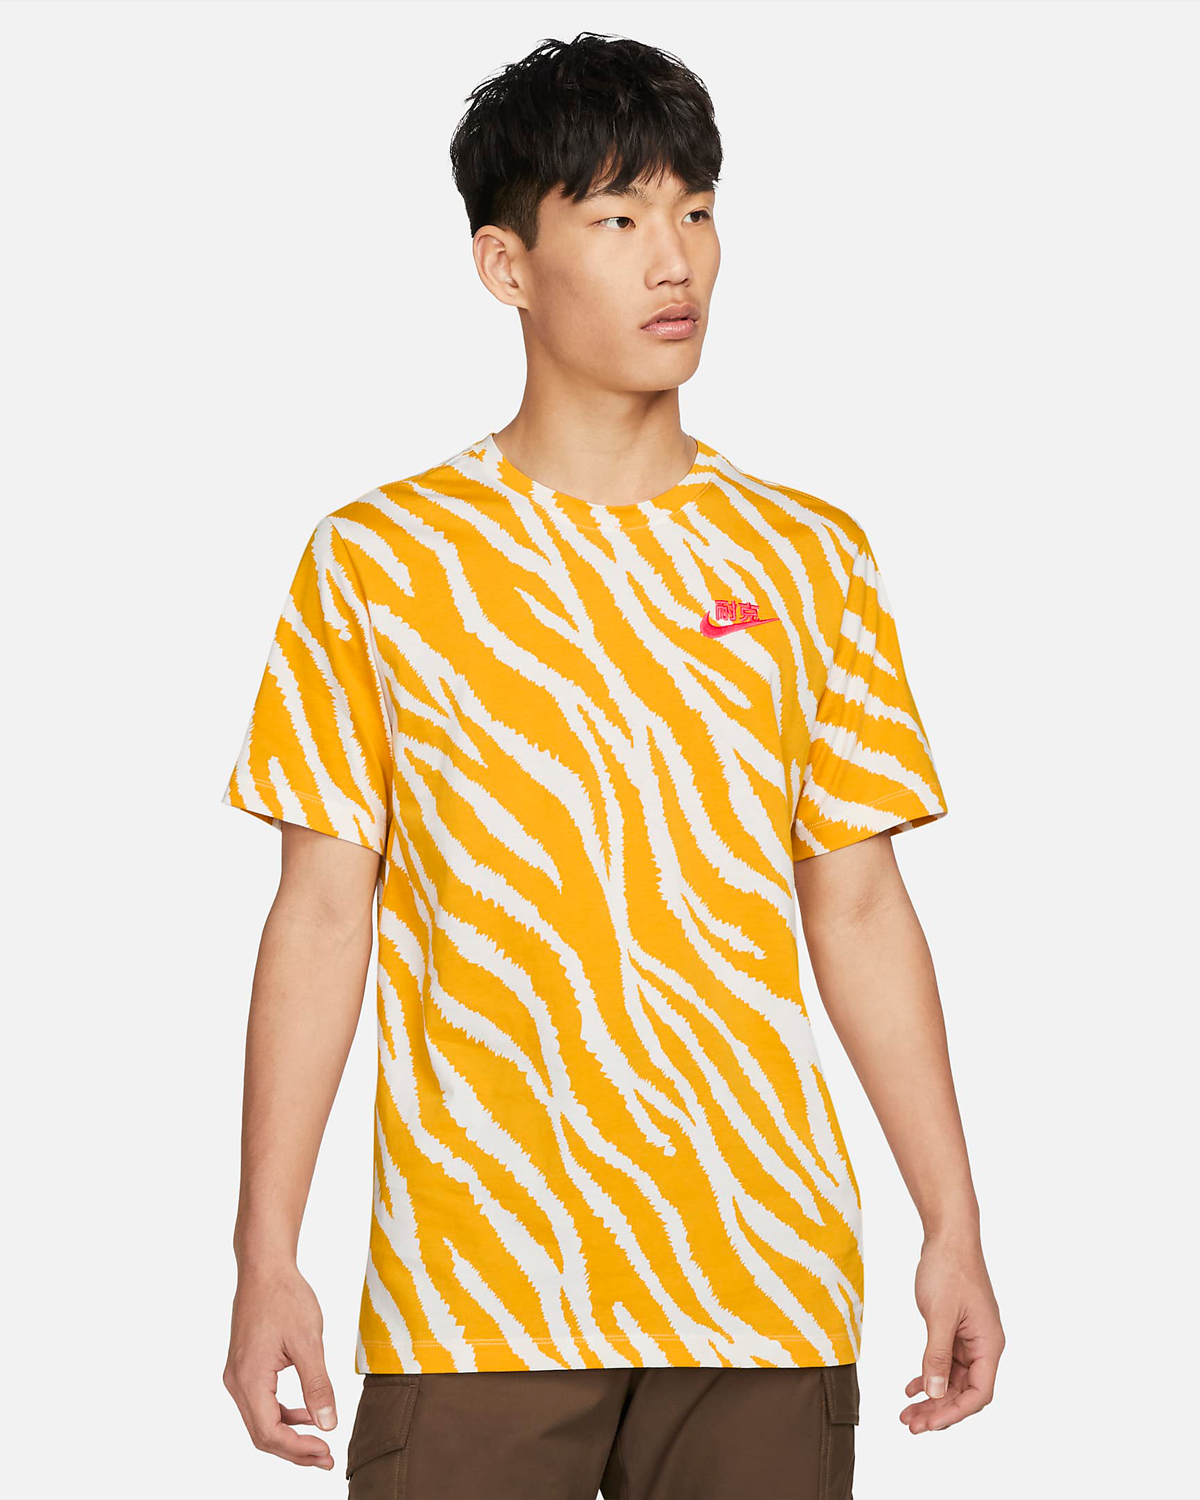 Nike-Sportswear-Tiger-Stripe-T-Shirt-Dark-Sulfur